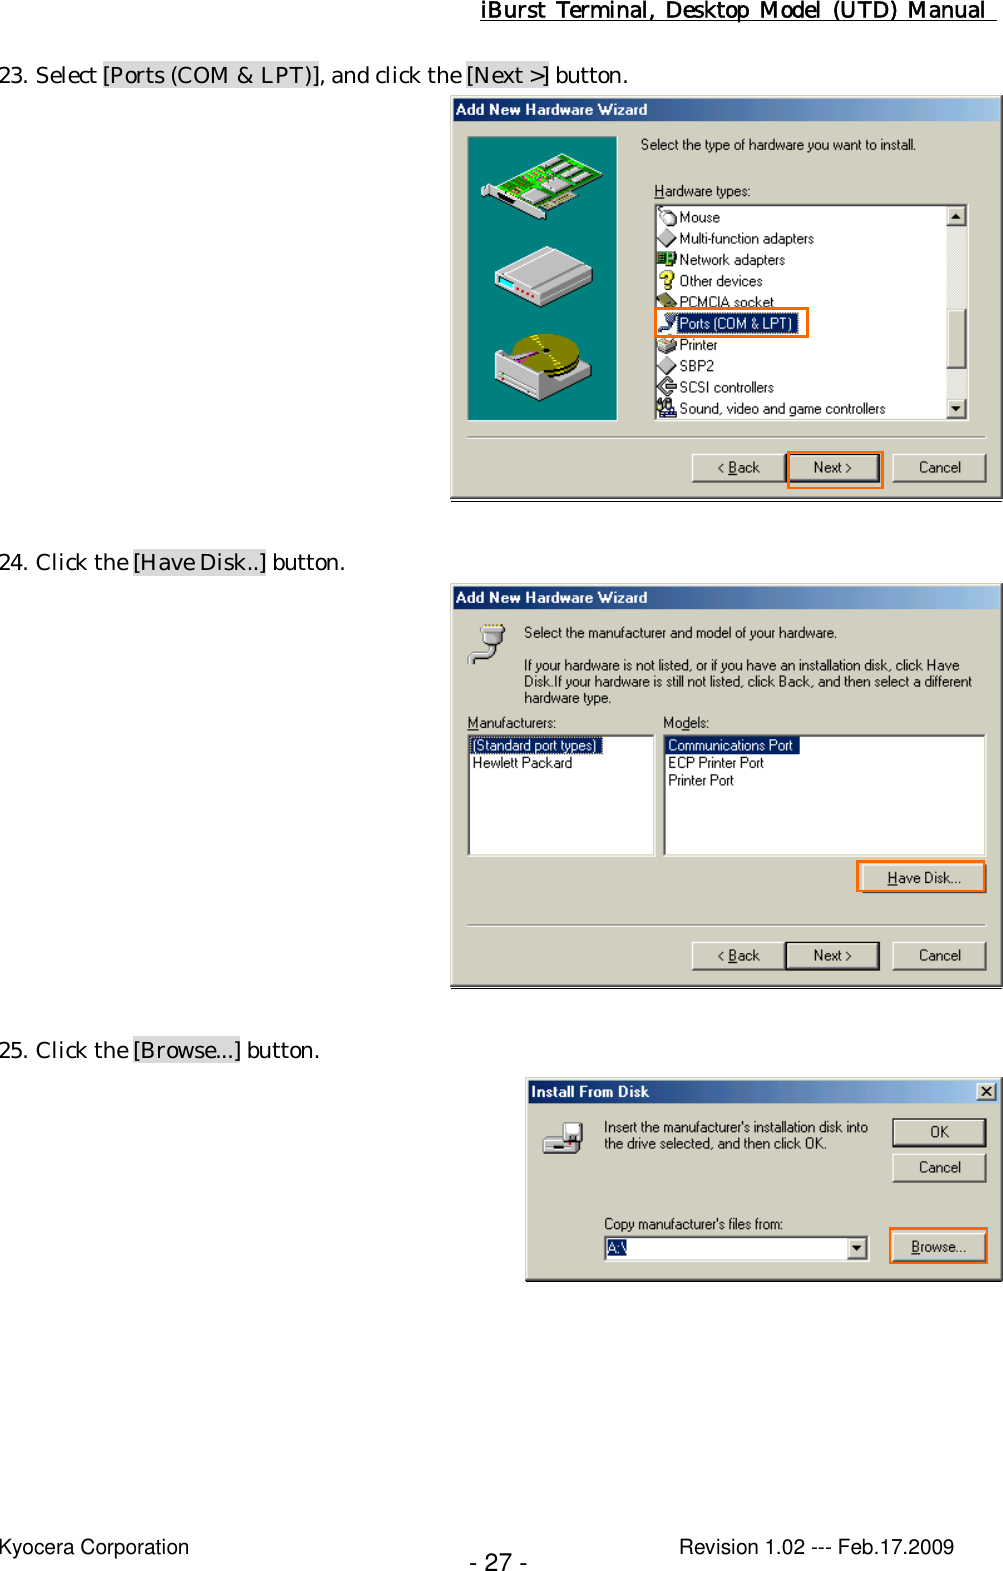 iBurst  Terminal, Desktop  Model  (UTD)  Manual    Kyocera Corporation                                                                                              Revision 1.02 --- Feb.17.2009 - 27 - 23. Select [Ports (COM &amp; LPT)], and click the [Next &gt;] button.   24. Click the [Have Disk..] button.   25. Click the [Browse...] button.   